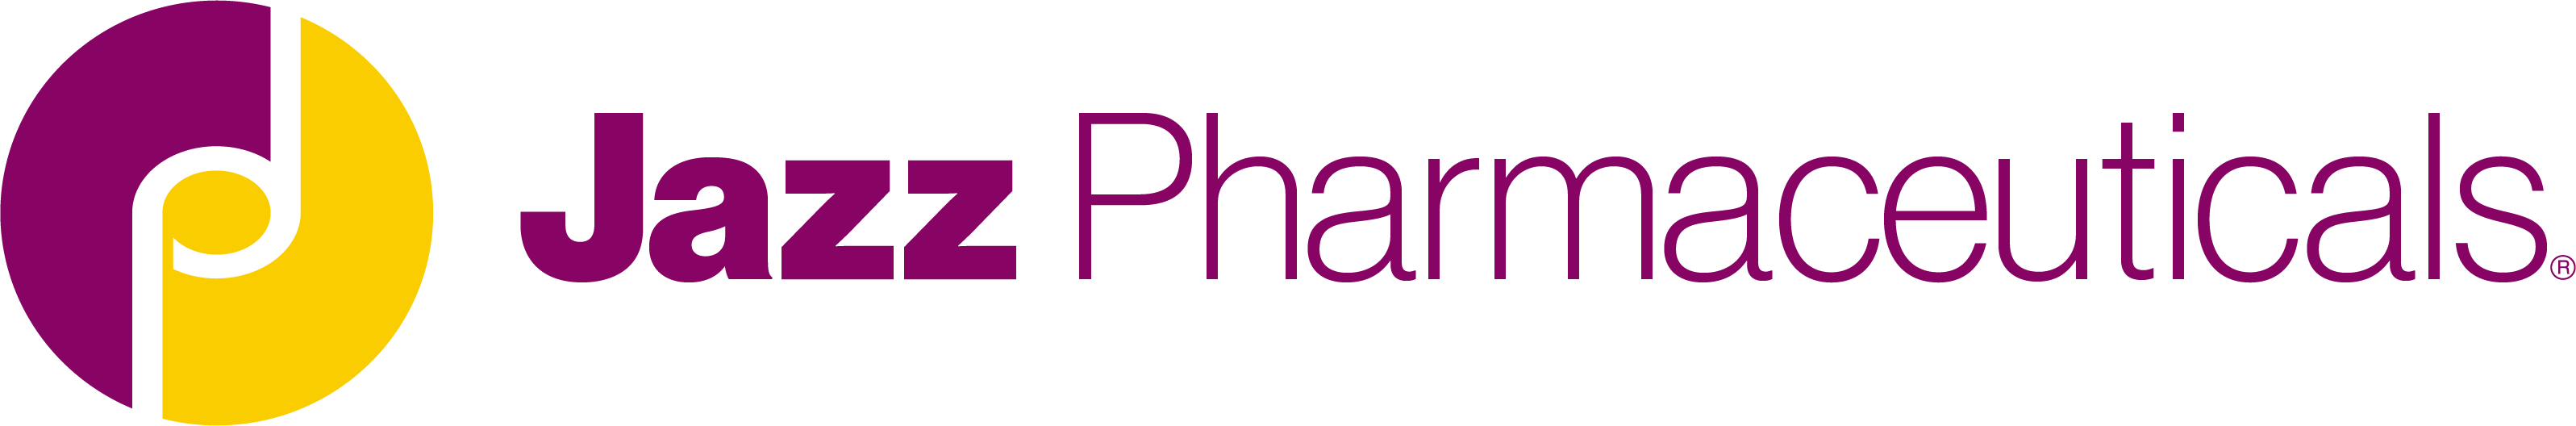 Jazz Pharmaceuticals Logo bueno